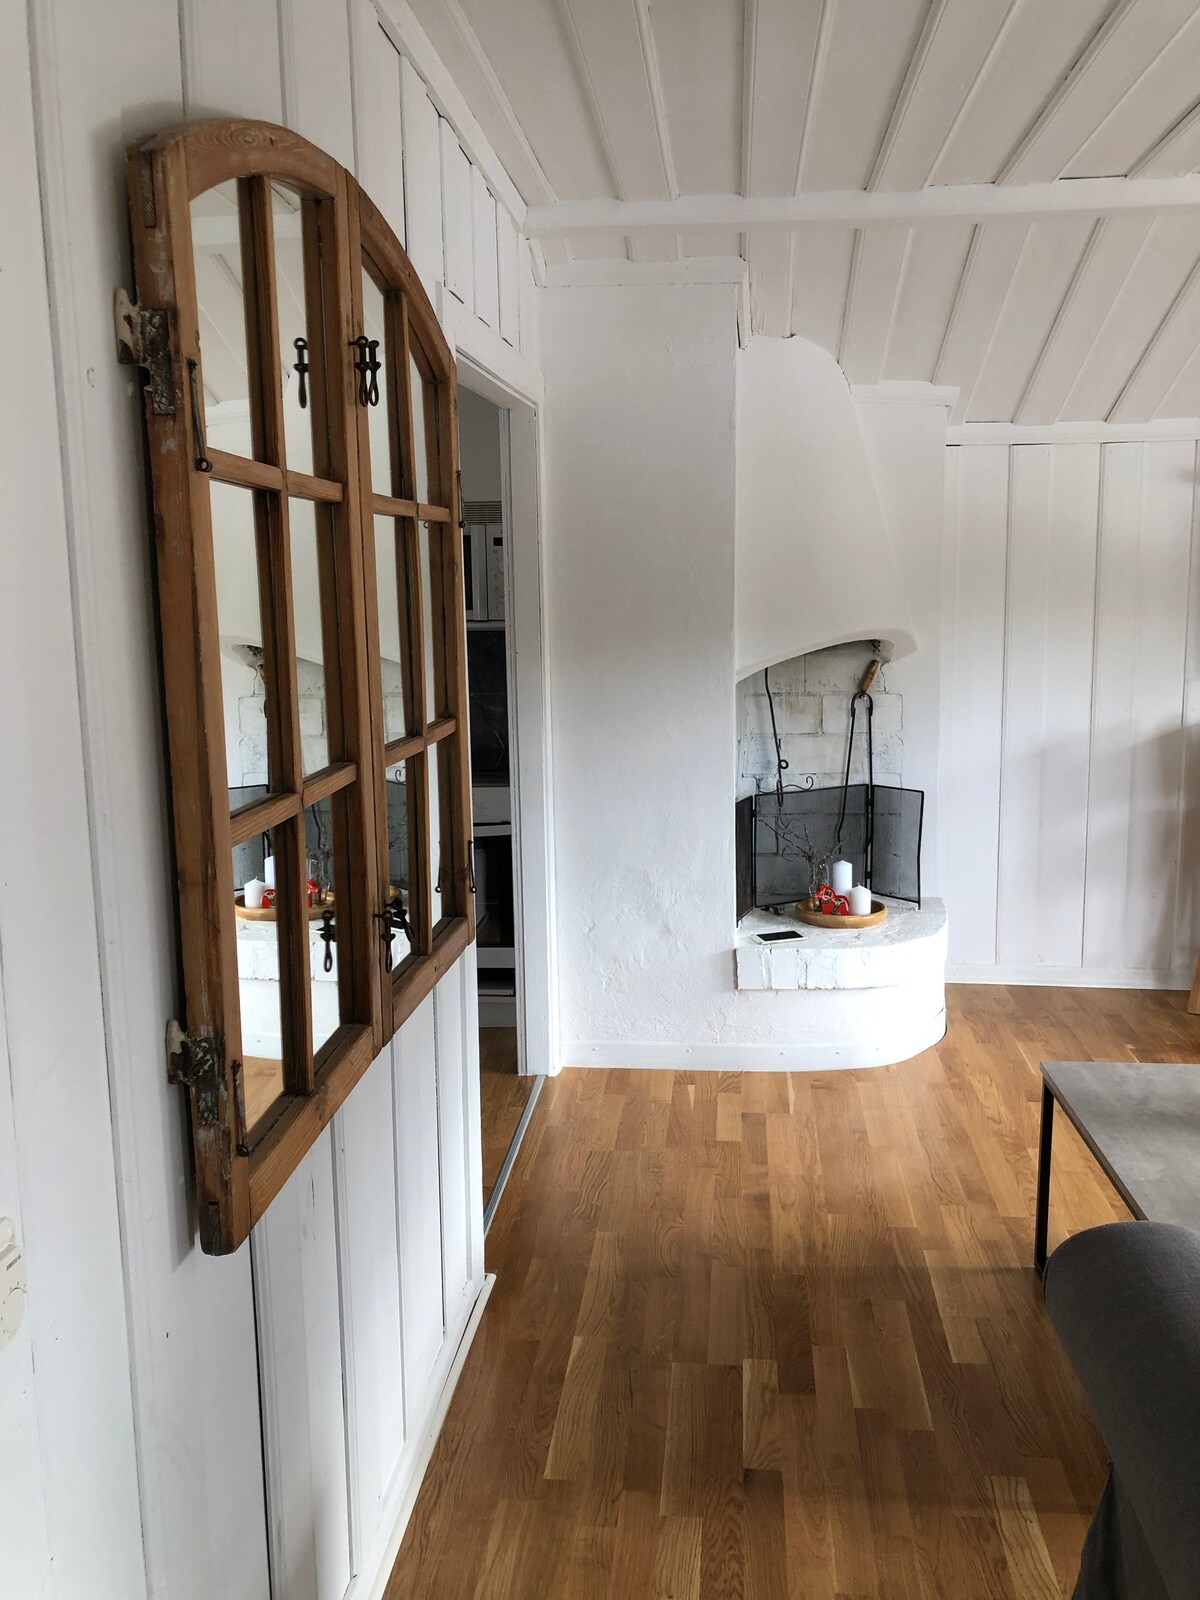 Sälen ，位于山区环境中的漂亮舒适小木屋。